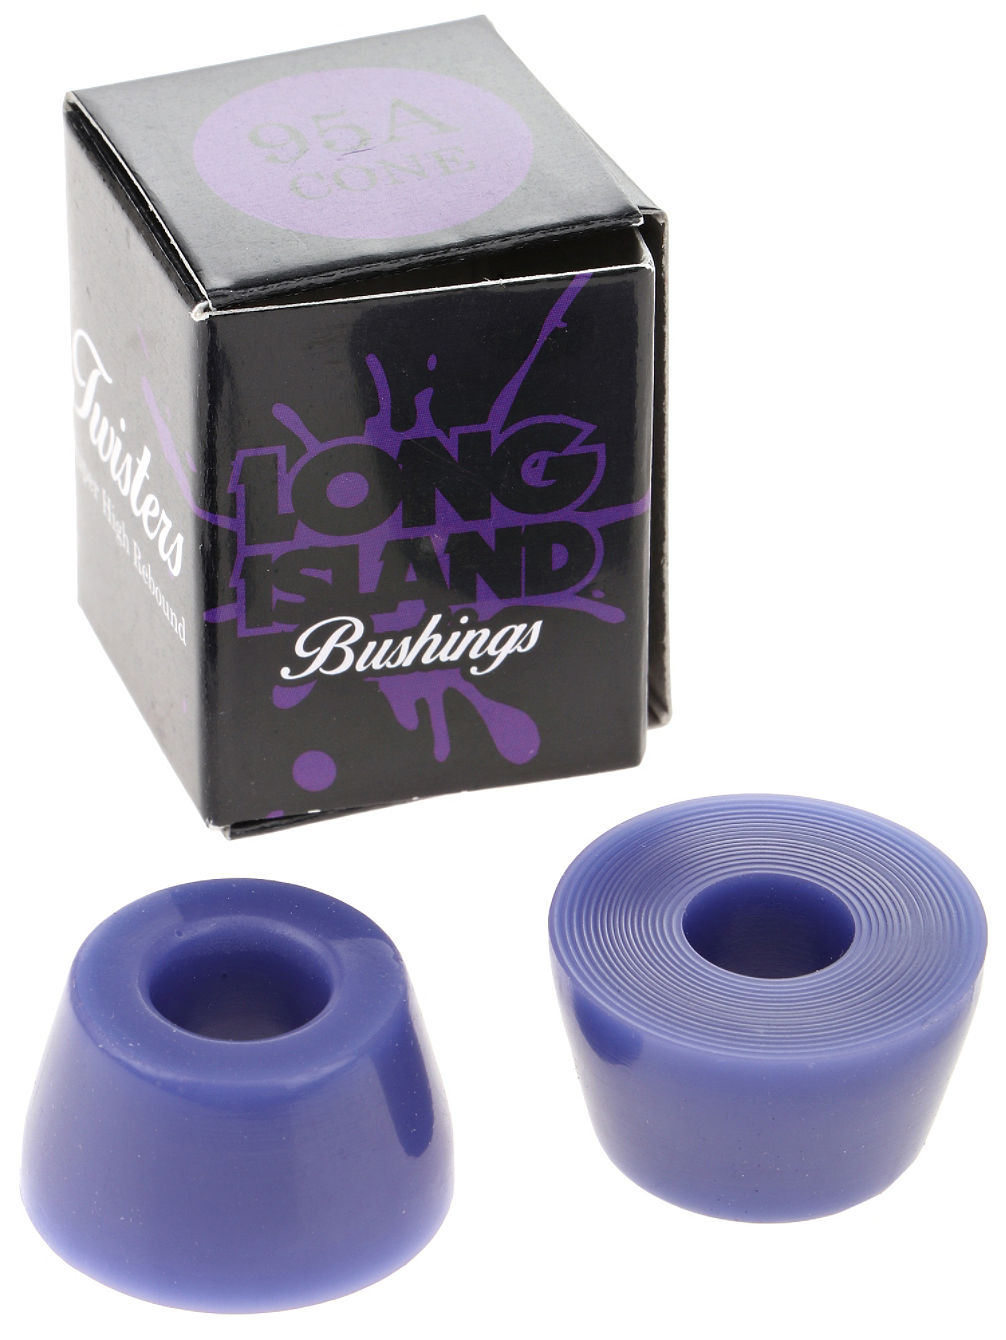 Twisters 95A Cone Purple Bushings-Set